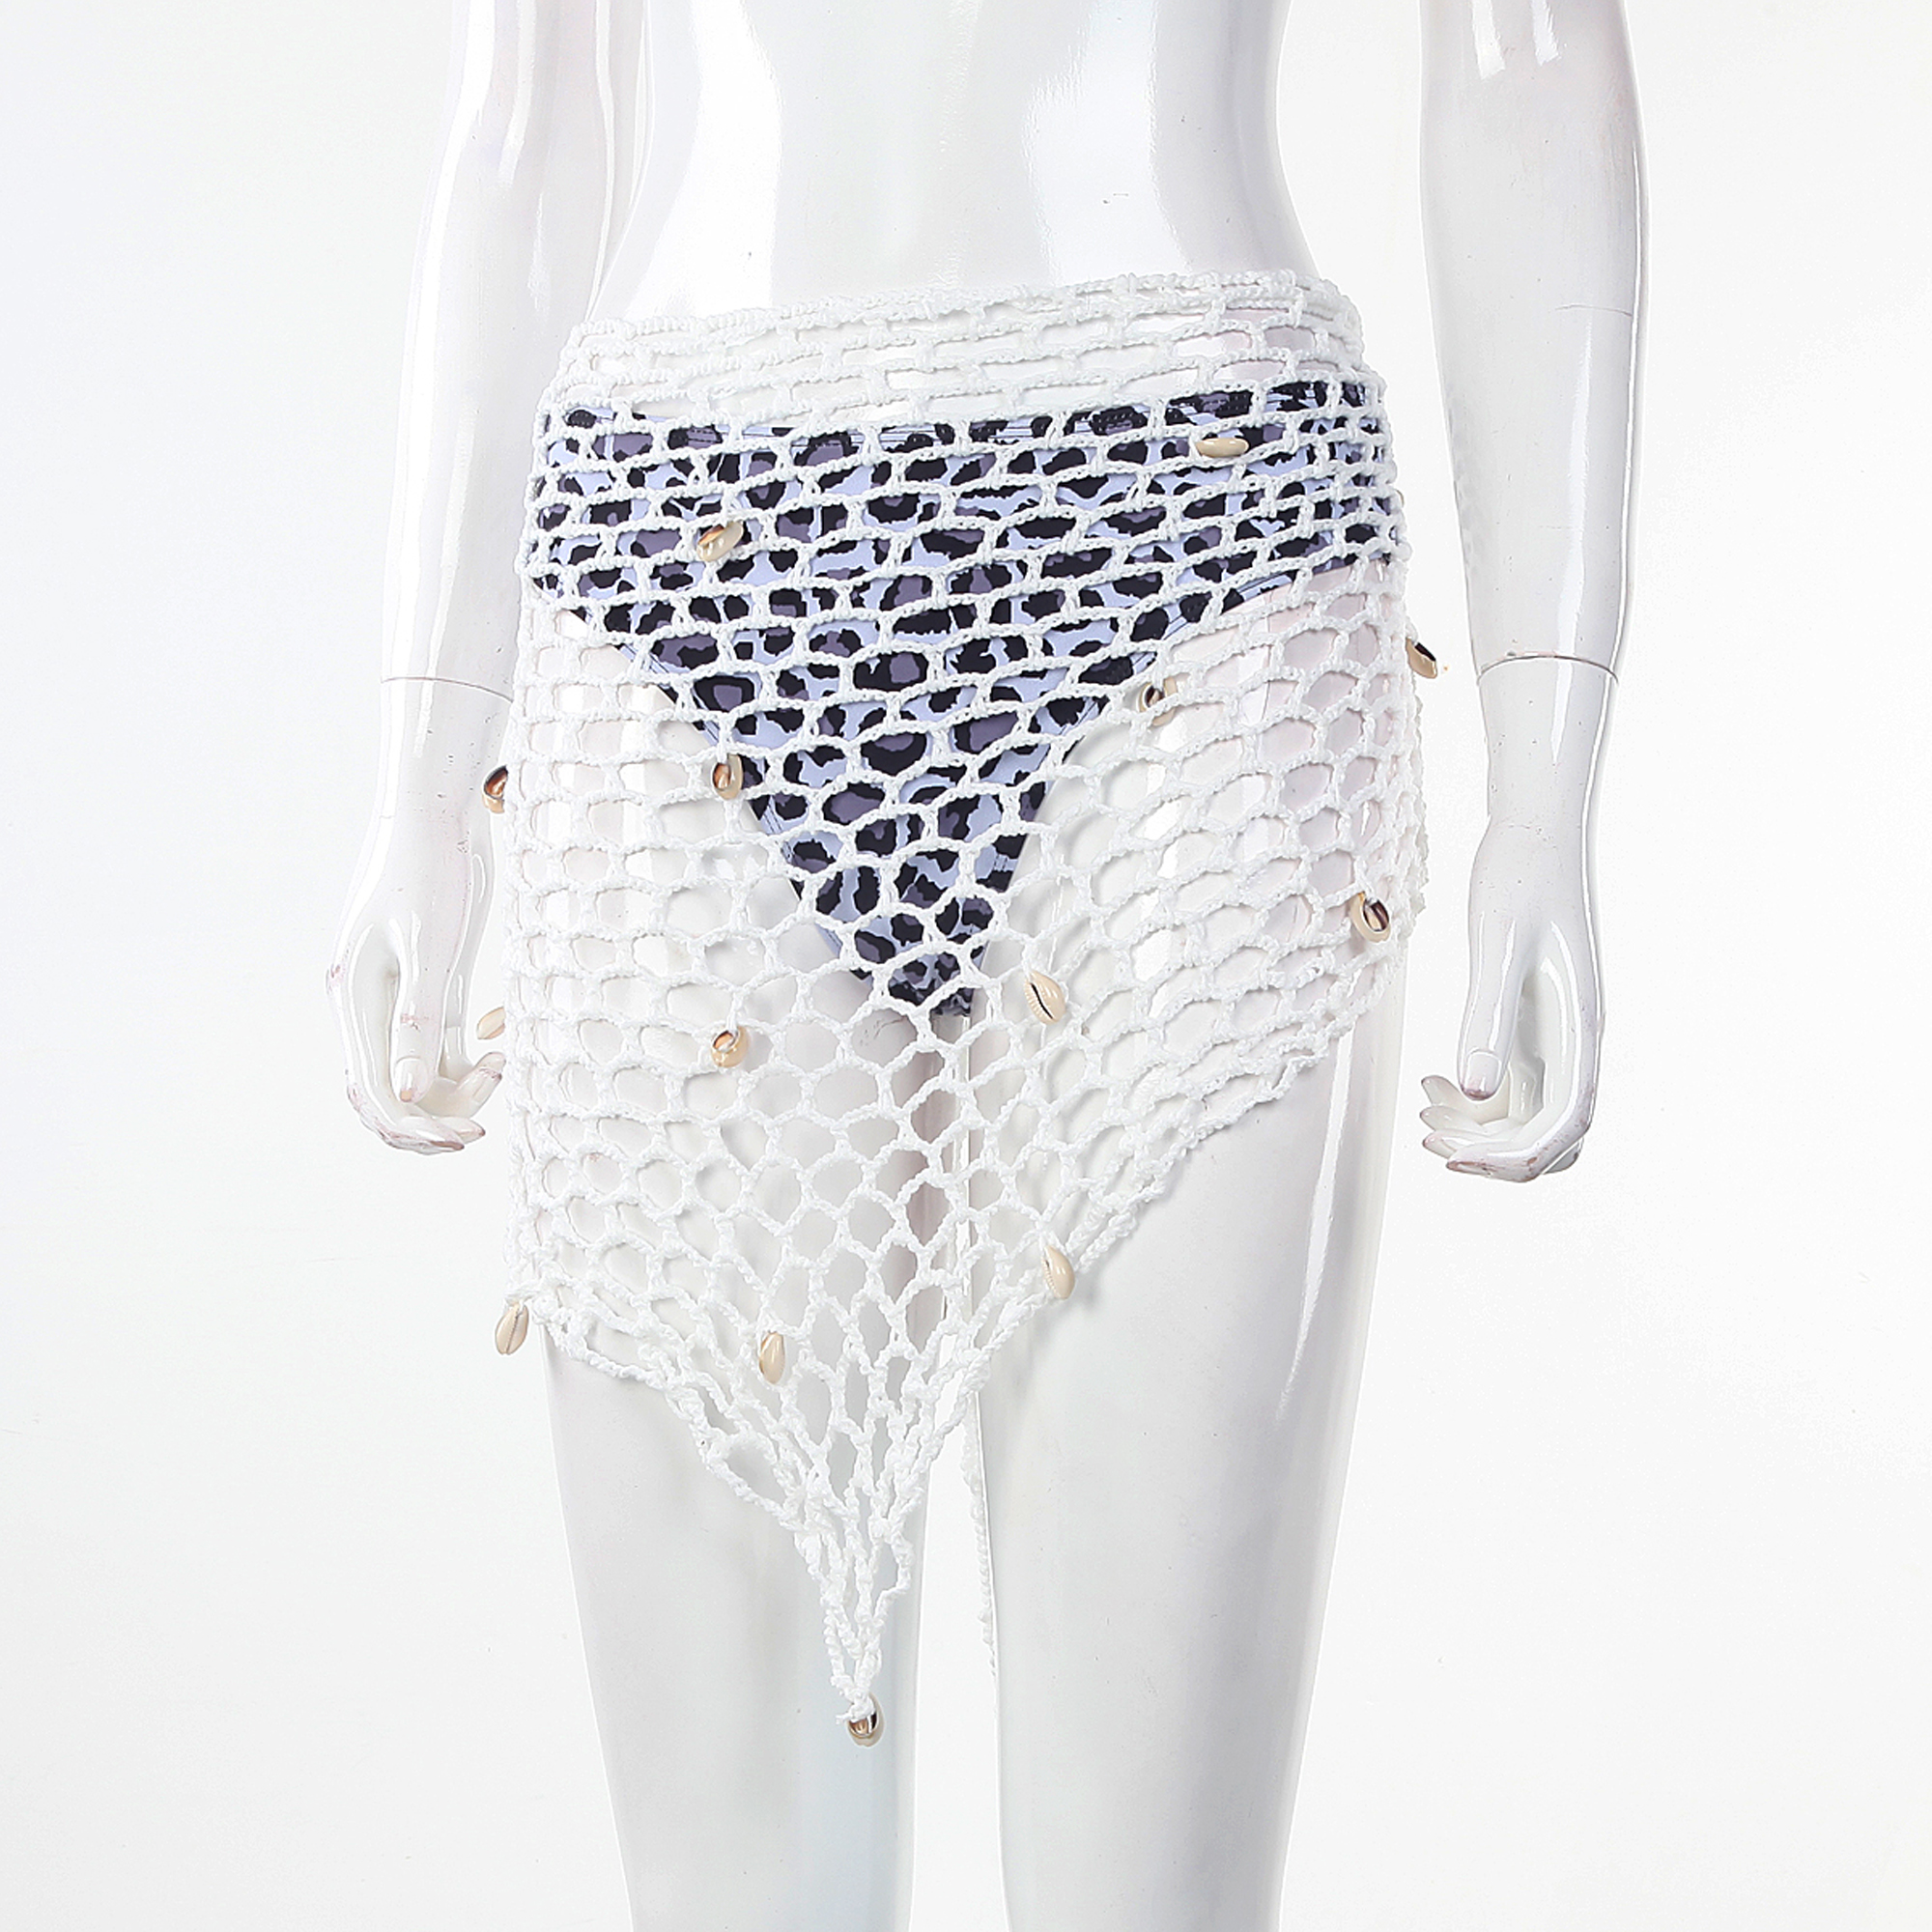 Dewadbow Women Crochet Fishnet Bikini Cover Ups Shell Beach Scarf Mesh Swimwear - image 2 of 6